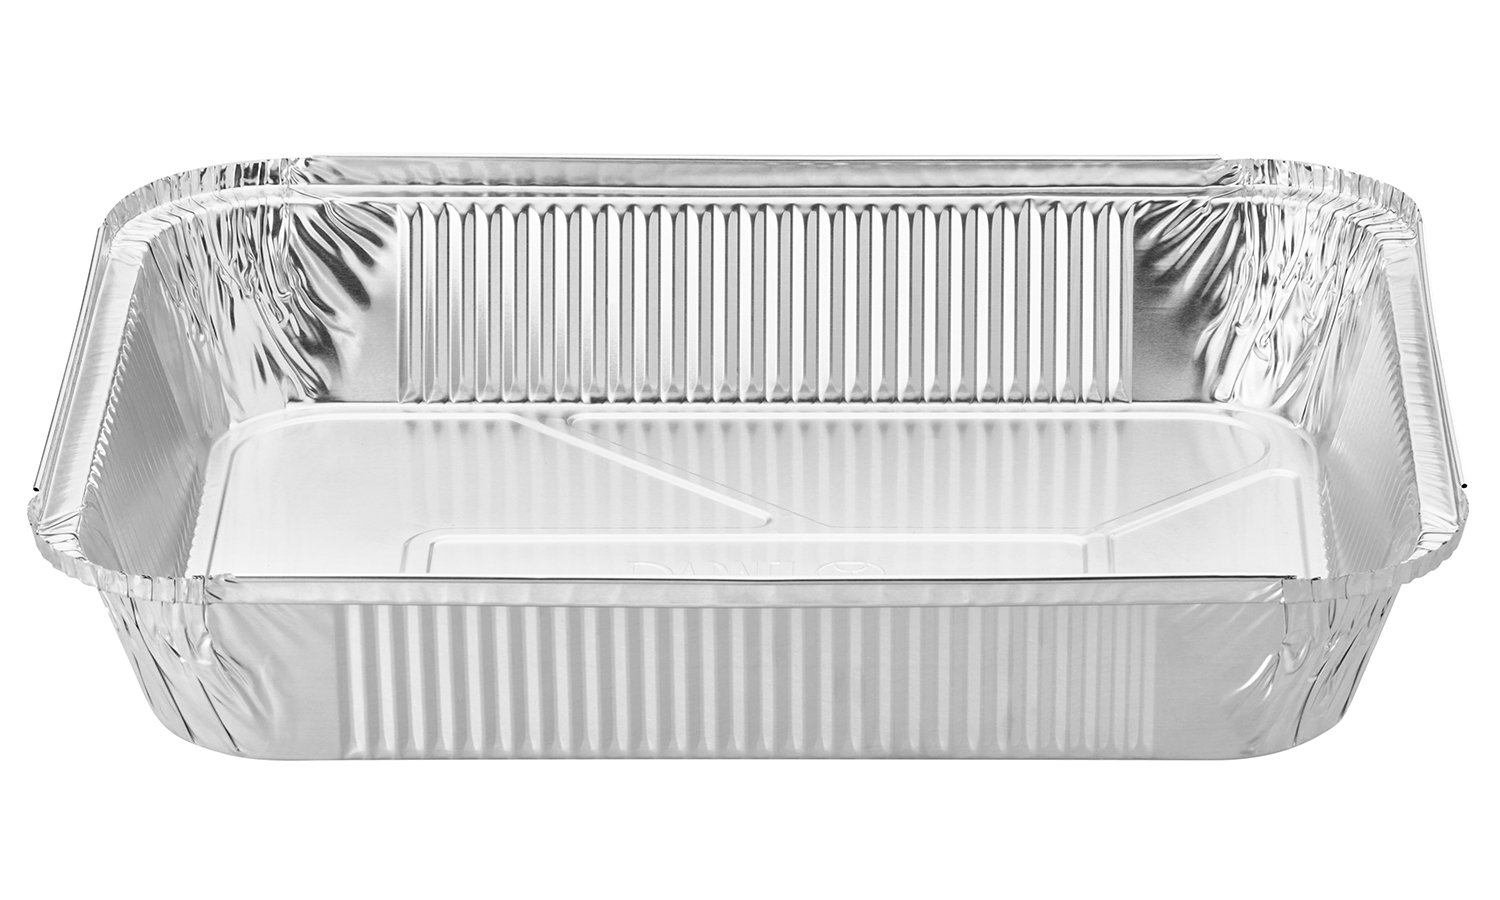 Bandeja de aluminio rectangular 104 OZ (3,068 ml)